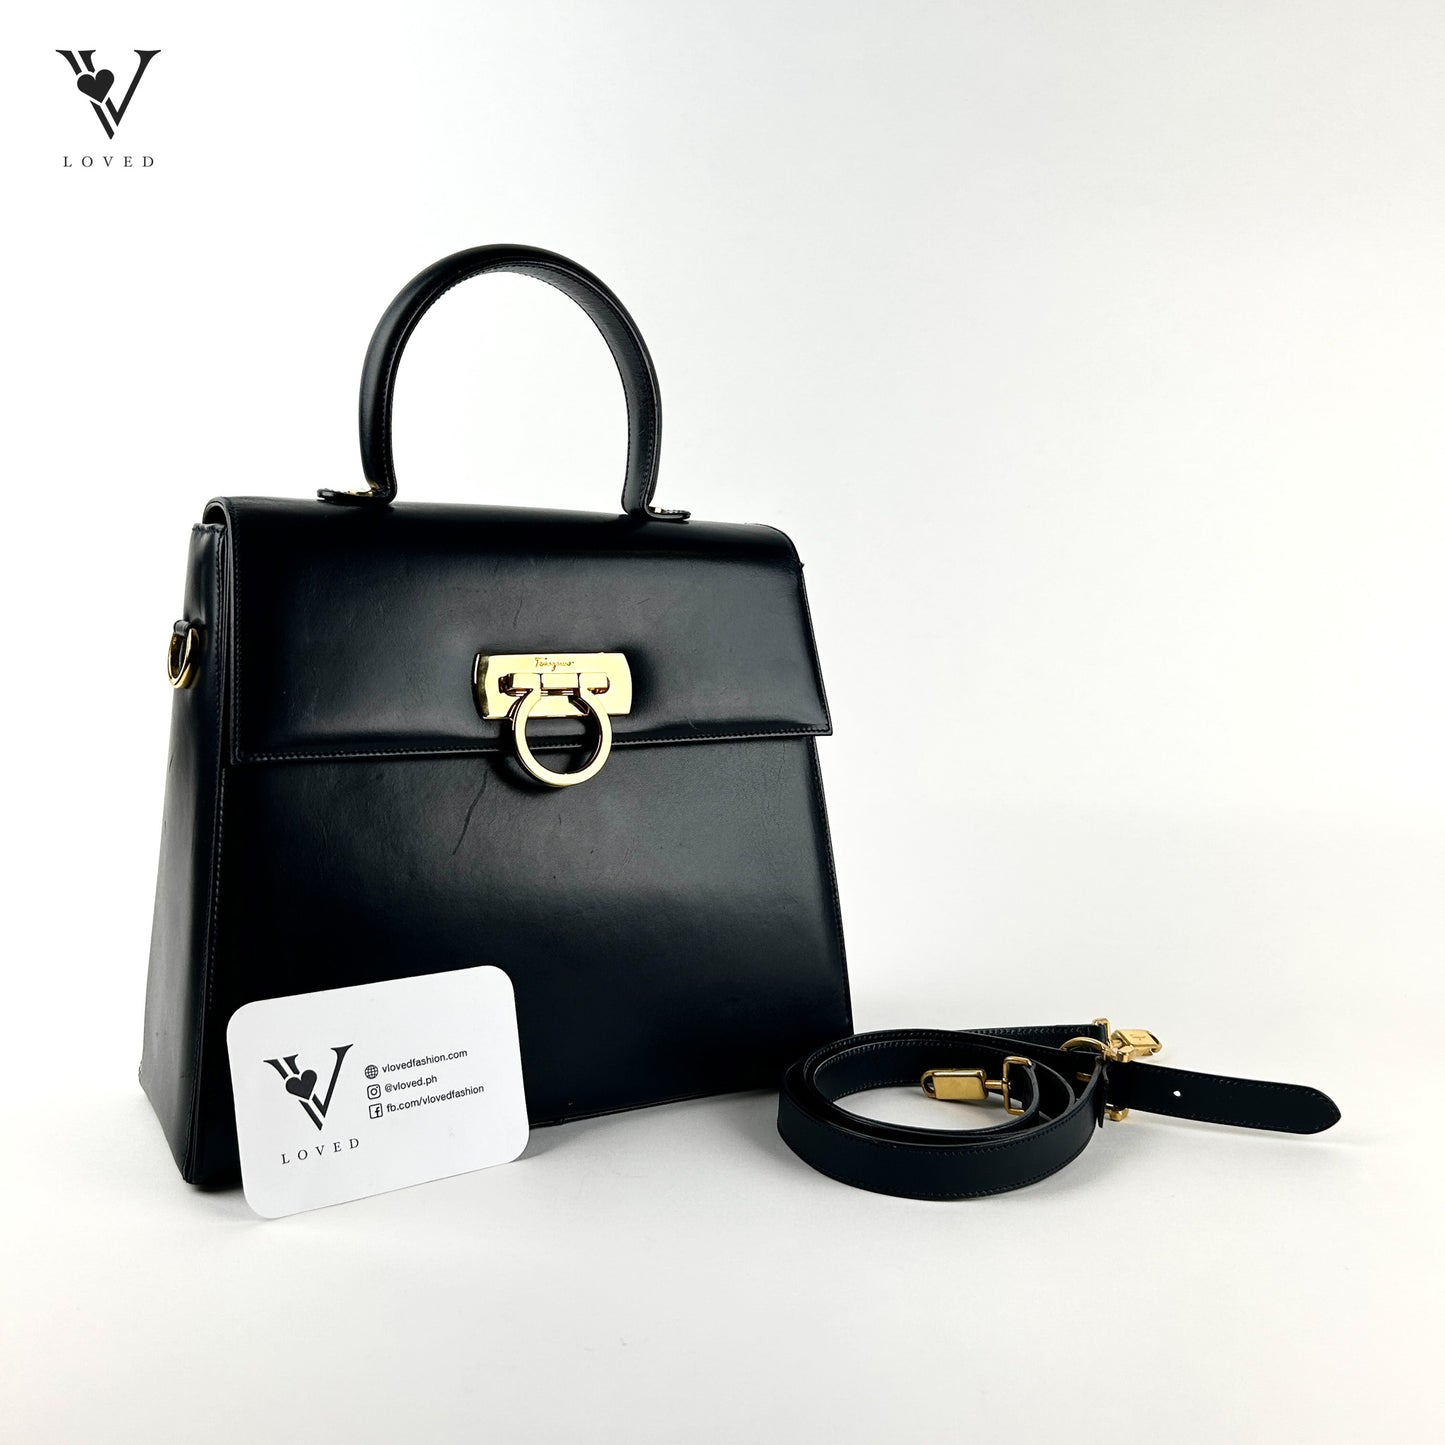 Gancini Two-Way Vintage Handbag in Black Smooth Leather